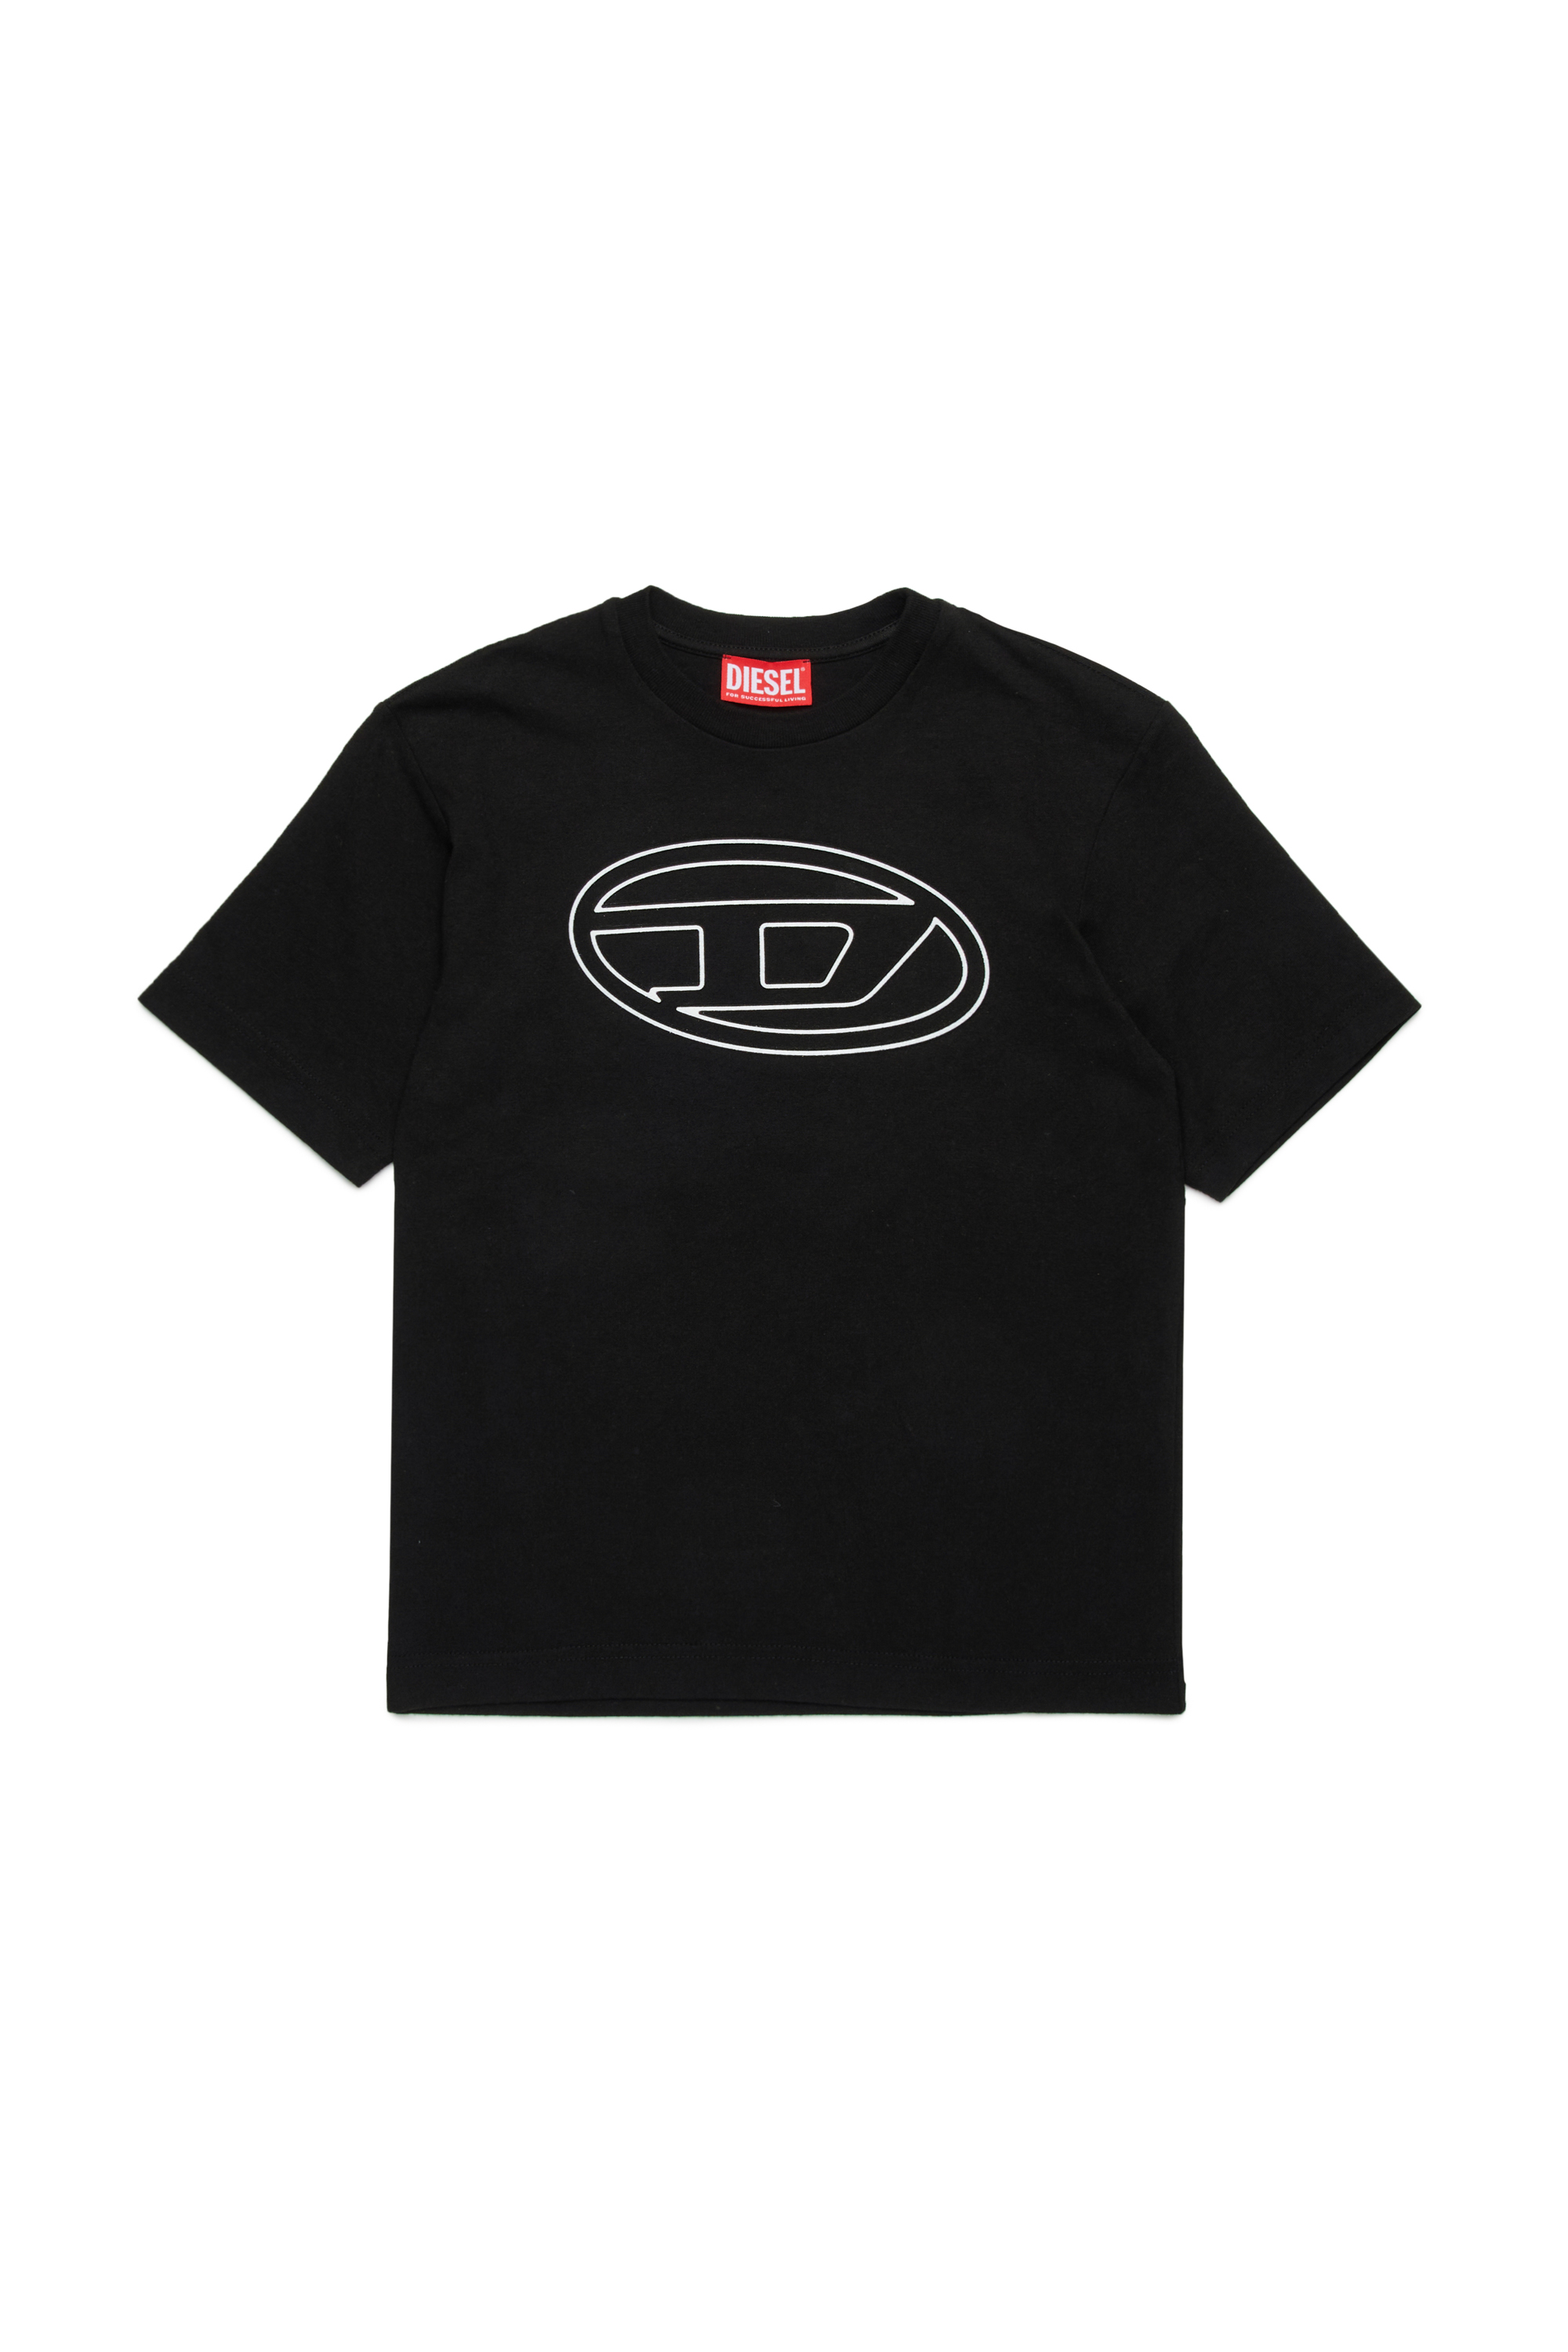 Diesel - TJUSTBIGOVAL OVER, Man T-shirt with Oval D outline logo in Black - Image 1